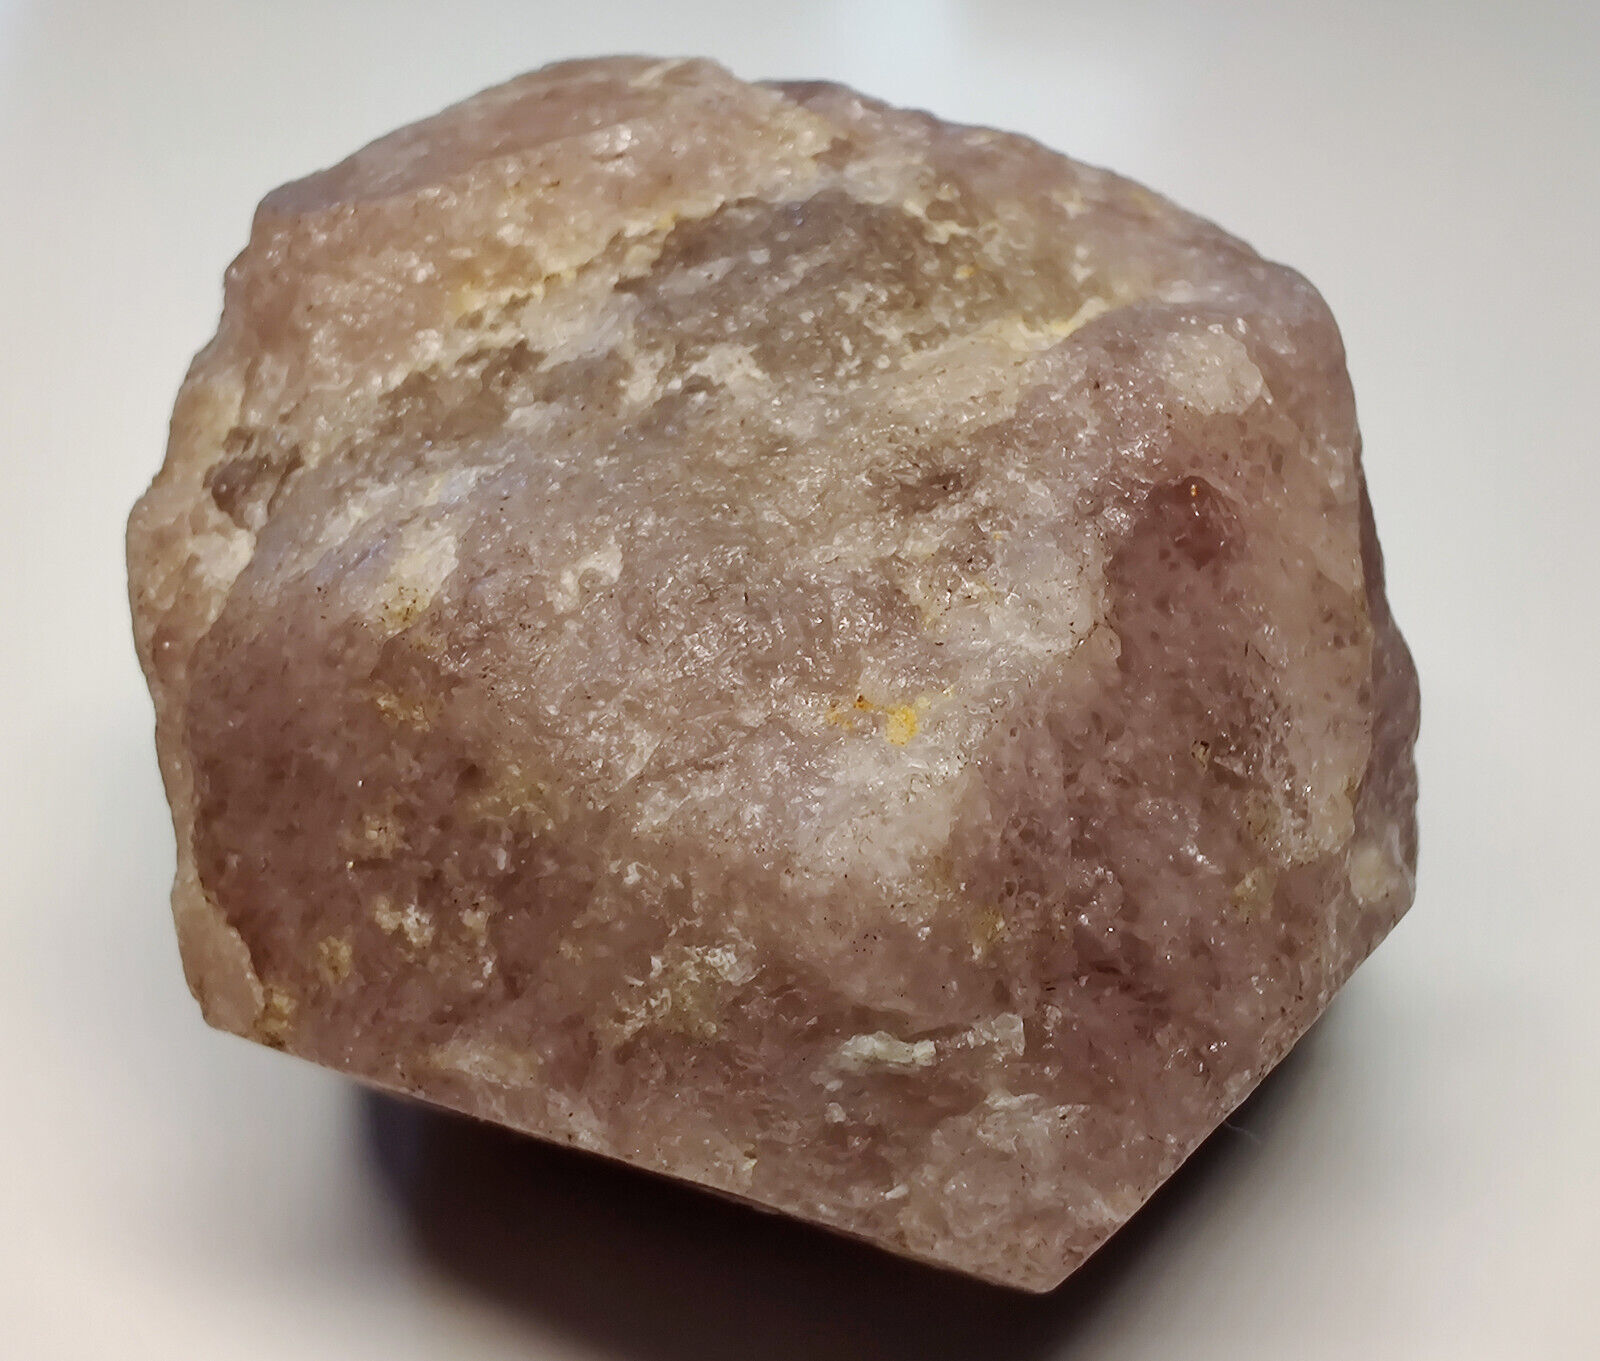 Pink Garnet (Rosolite) crystal. Coahulia, Mexico. 83 grams. Video.